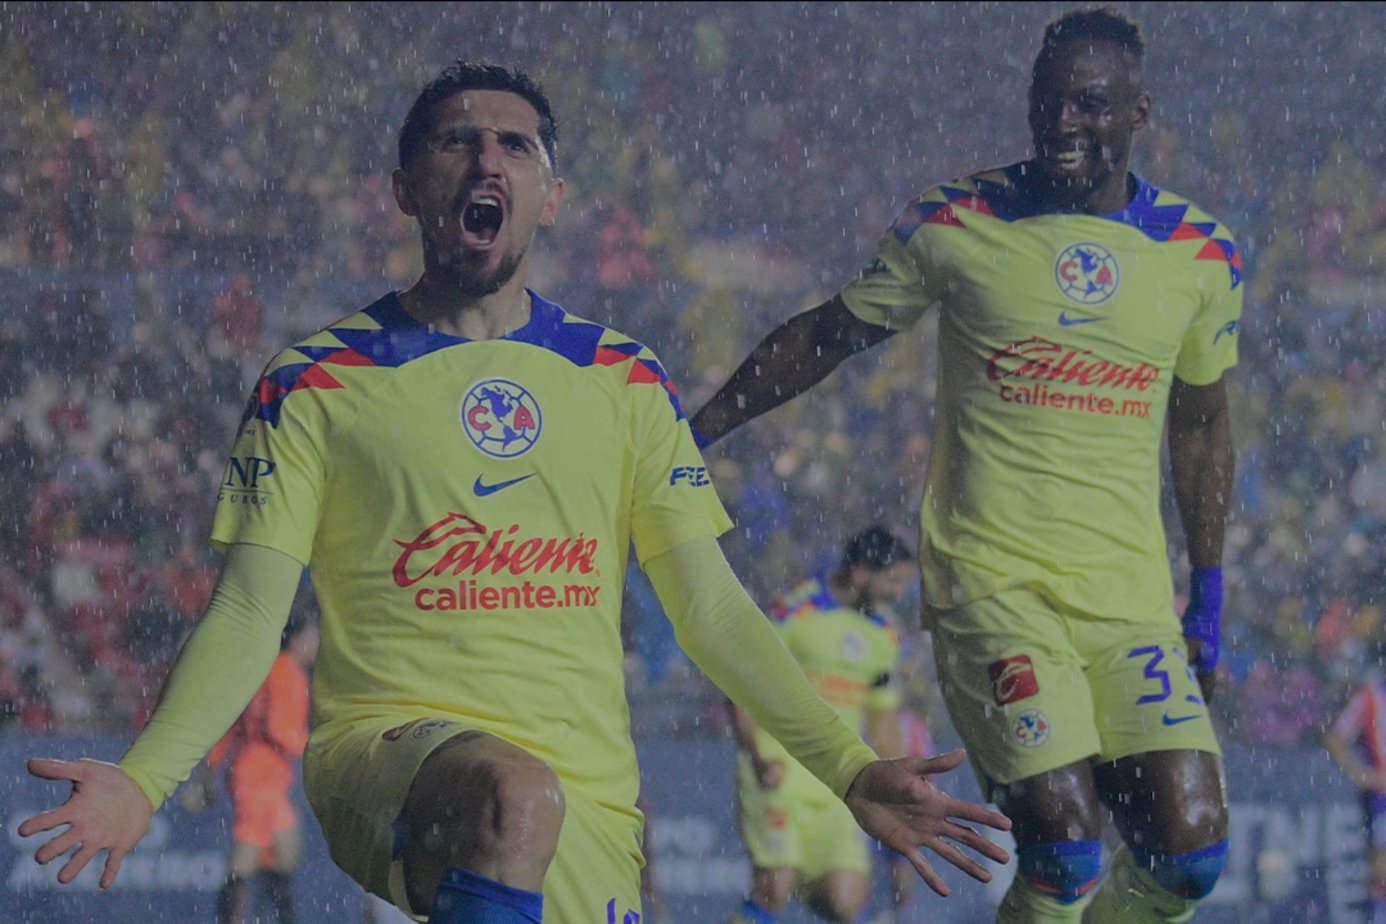 Club América x San Luis: previsão das semifinais da Liguilla